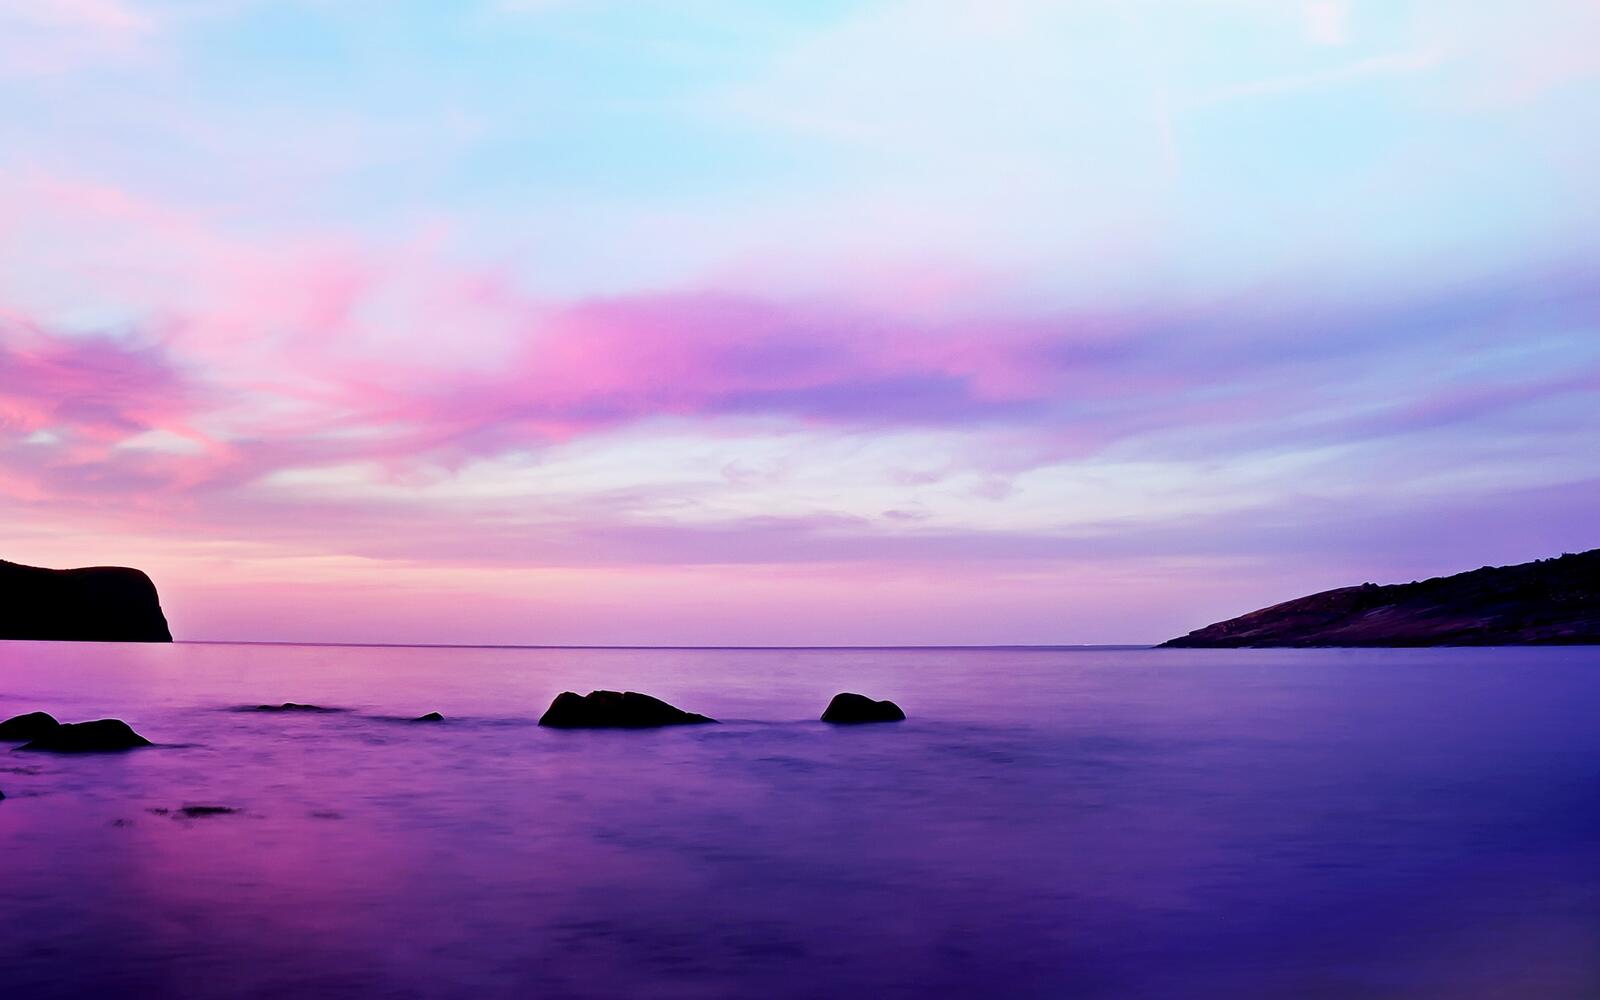 Бесплатное фото Нежно-фиолетовый закат на море